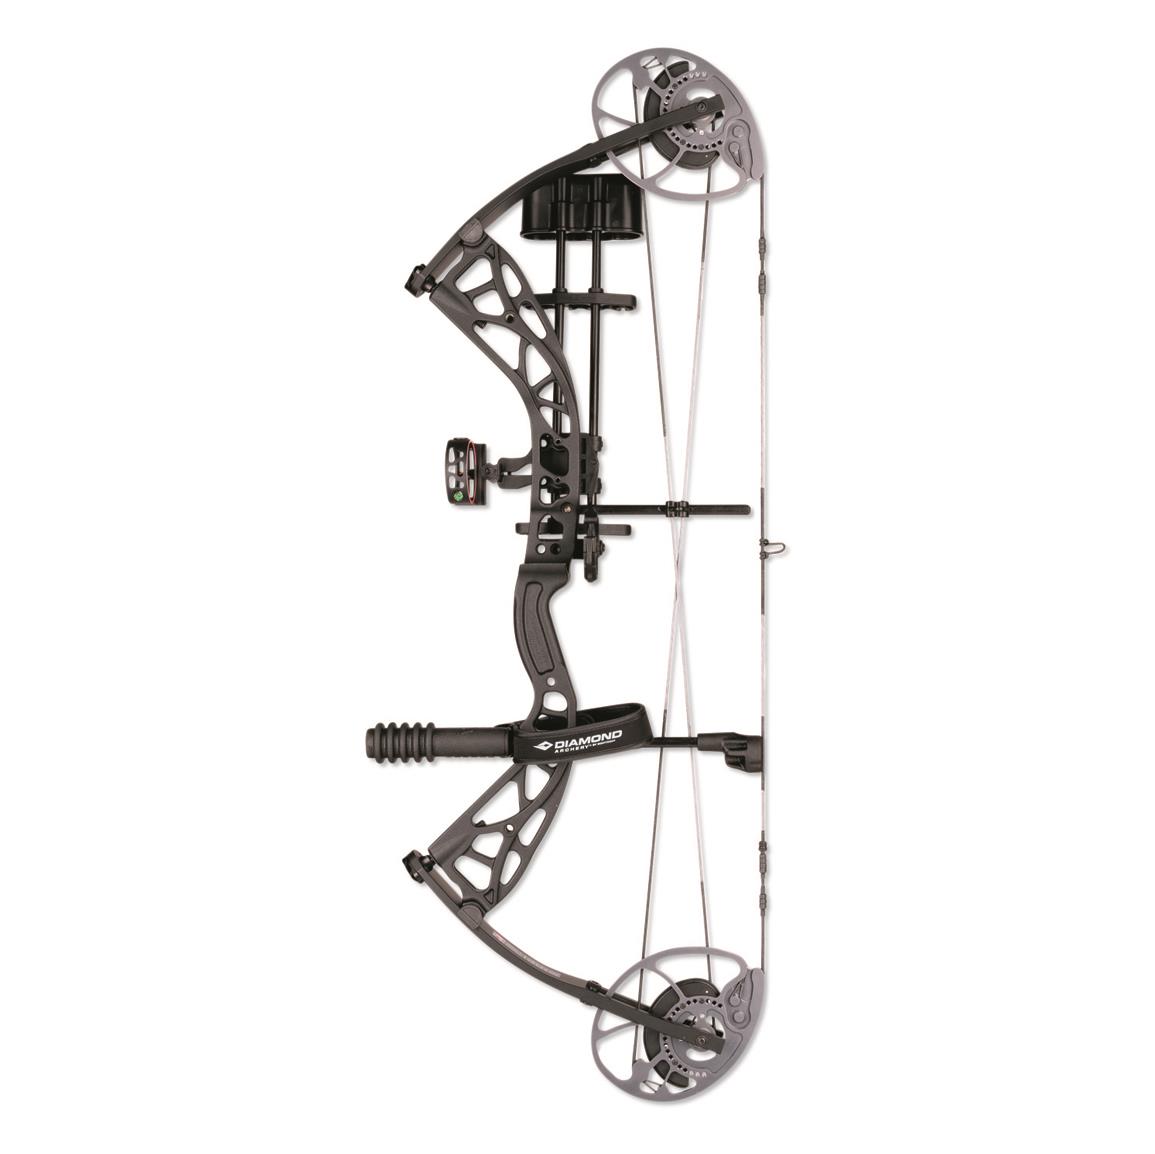 Diamond Archery Edge Max Compound Bow Package, 20-70 lbs., Black